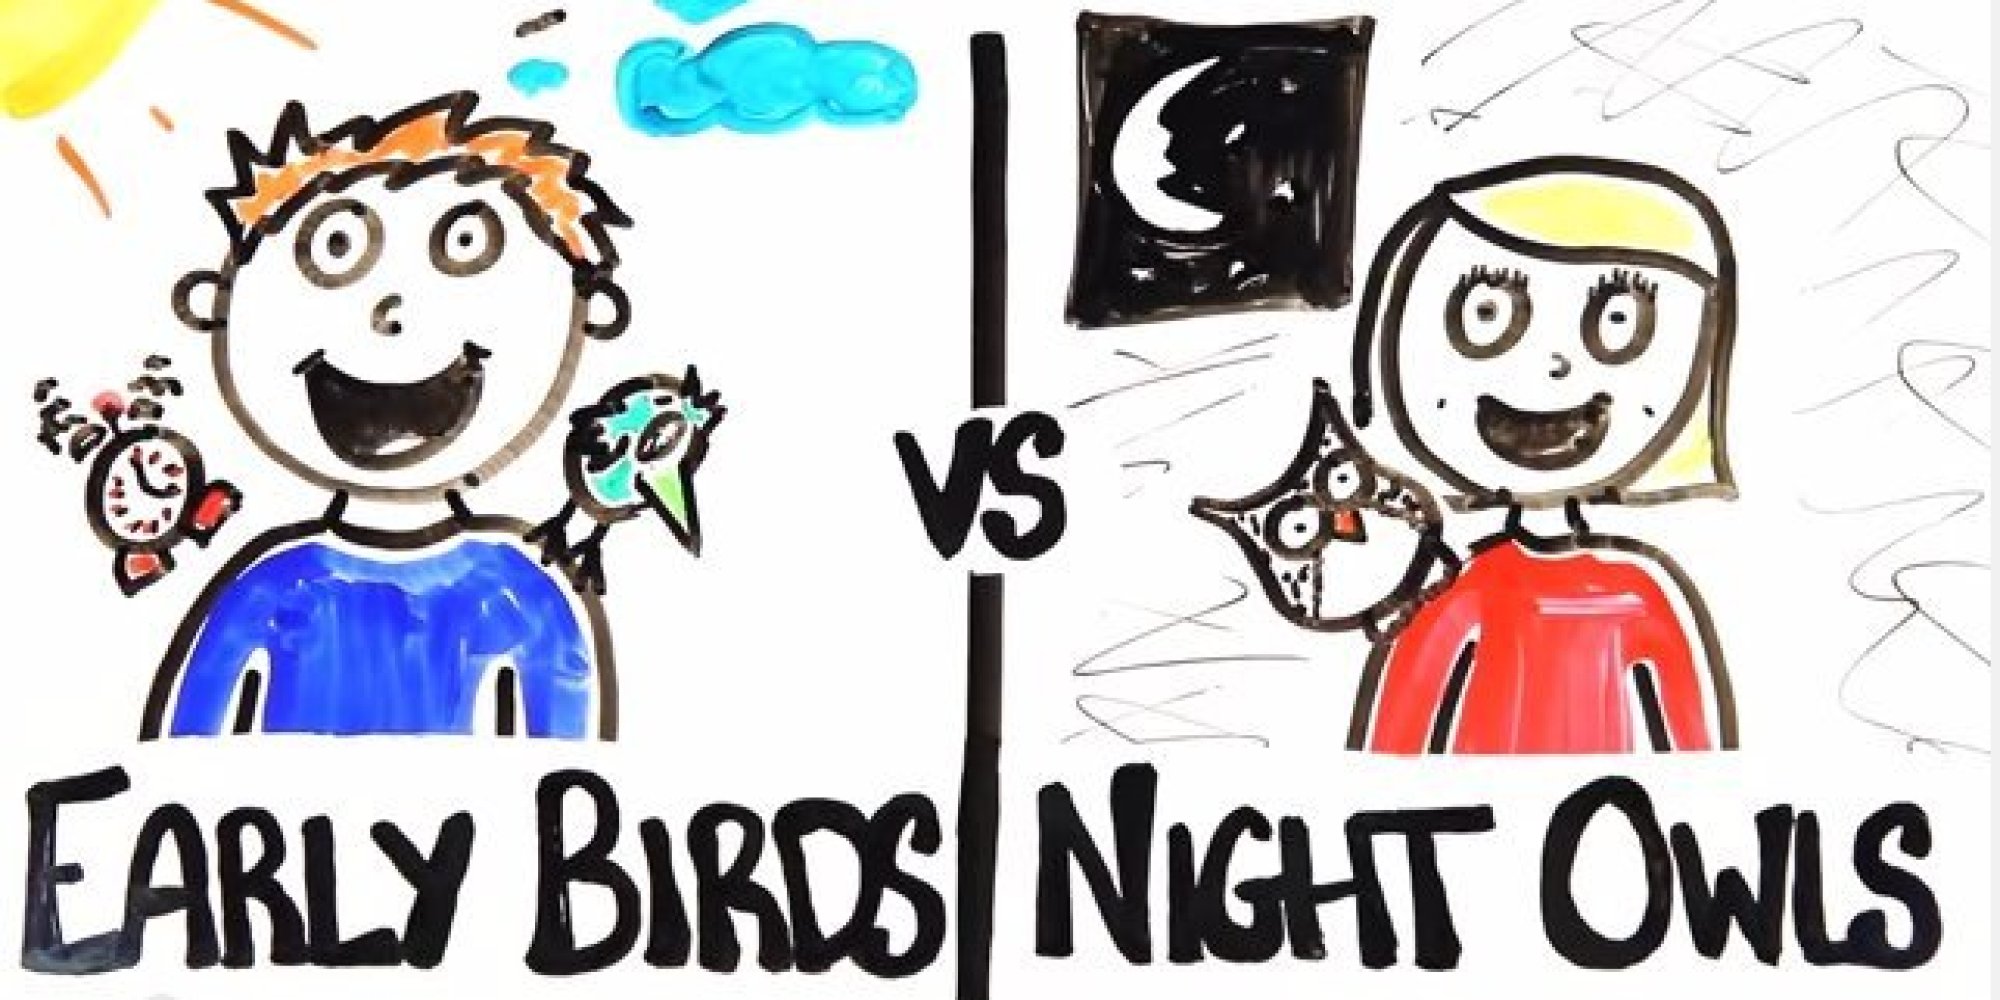 night owl sleep study accuracy